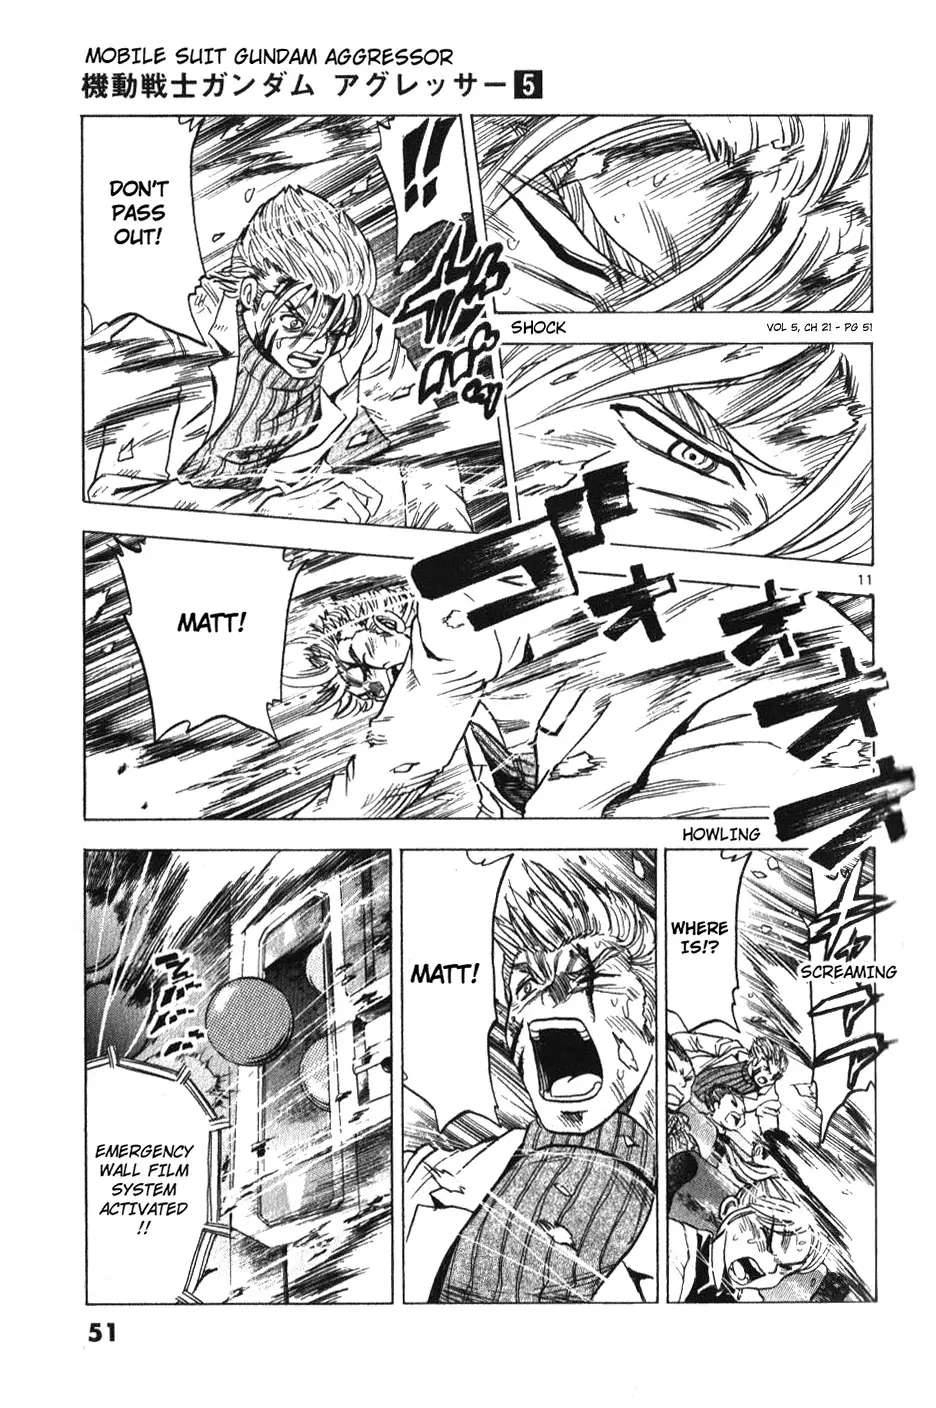 Mobile Suit Gundam Aggressor - 21 page 11-6b4d8e4b